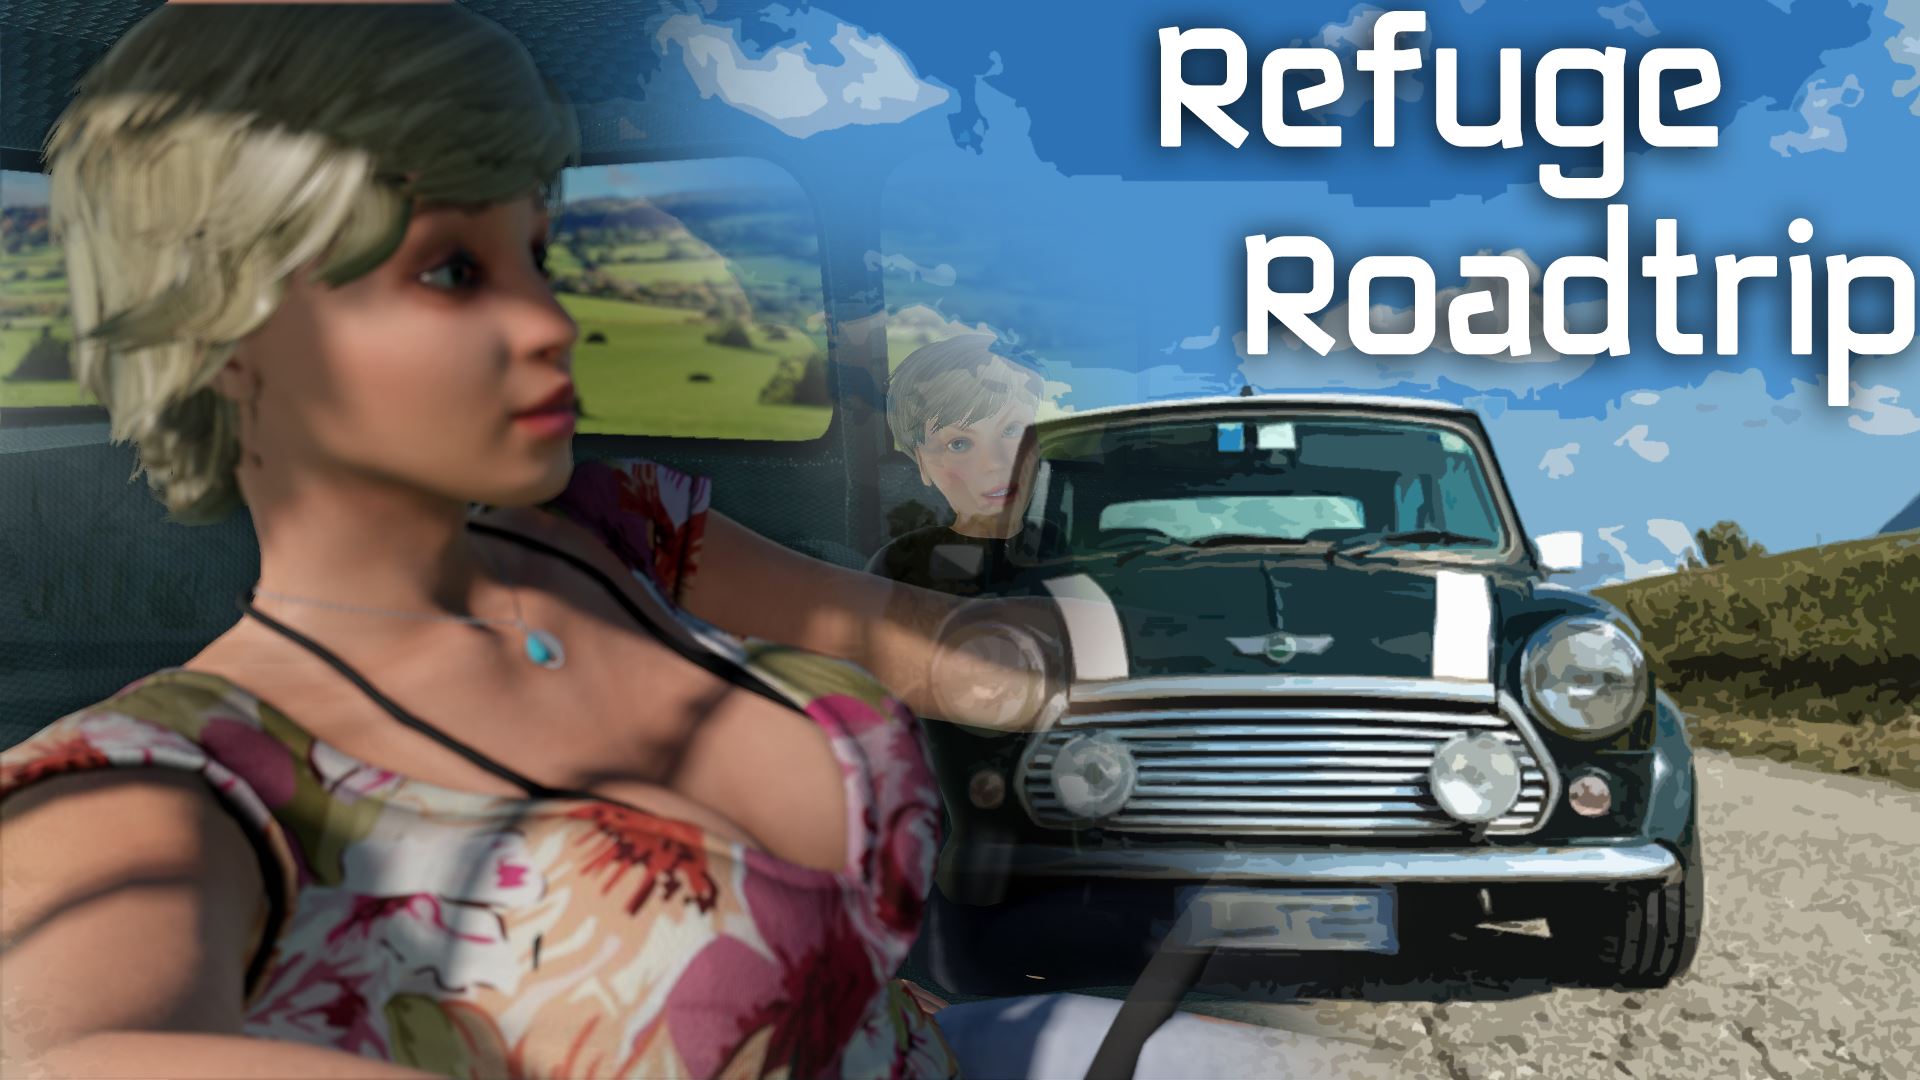 Refuge Roadtrip porn xxx game download cover